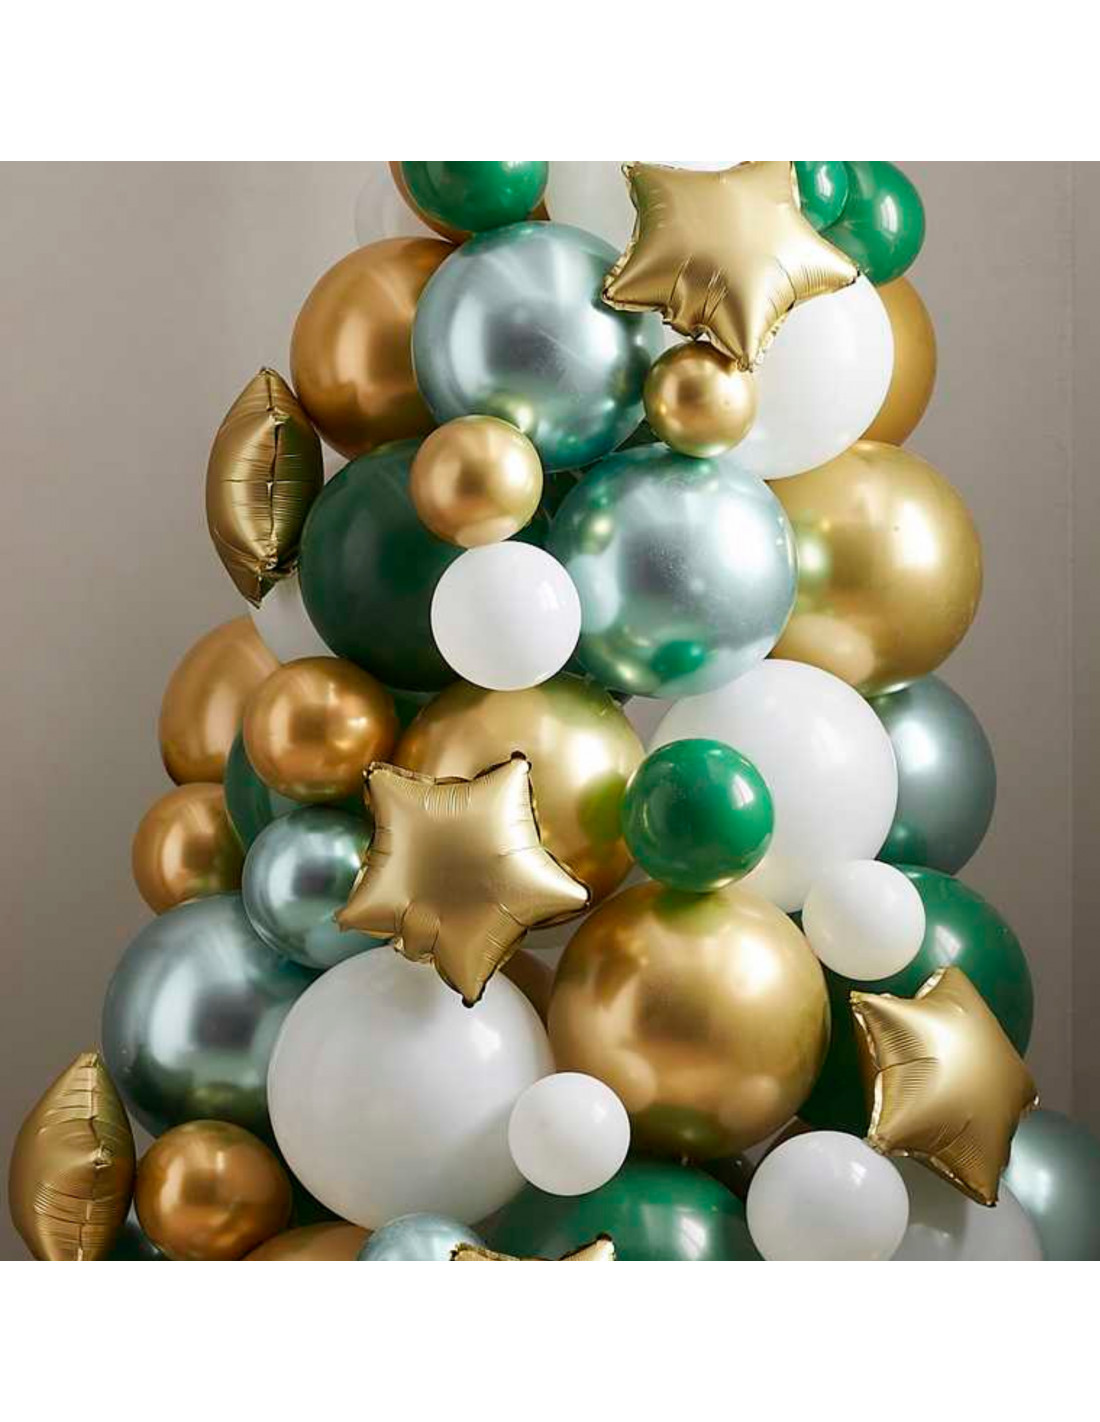 Kit Sapin de Noel en Ballons Verts Blancs et Or